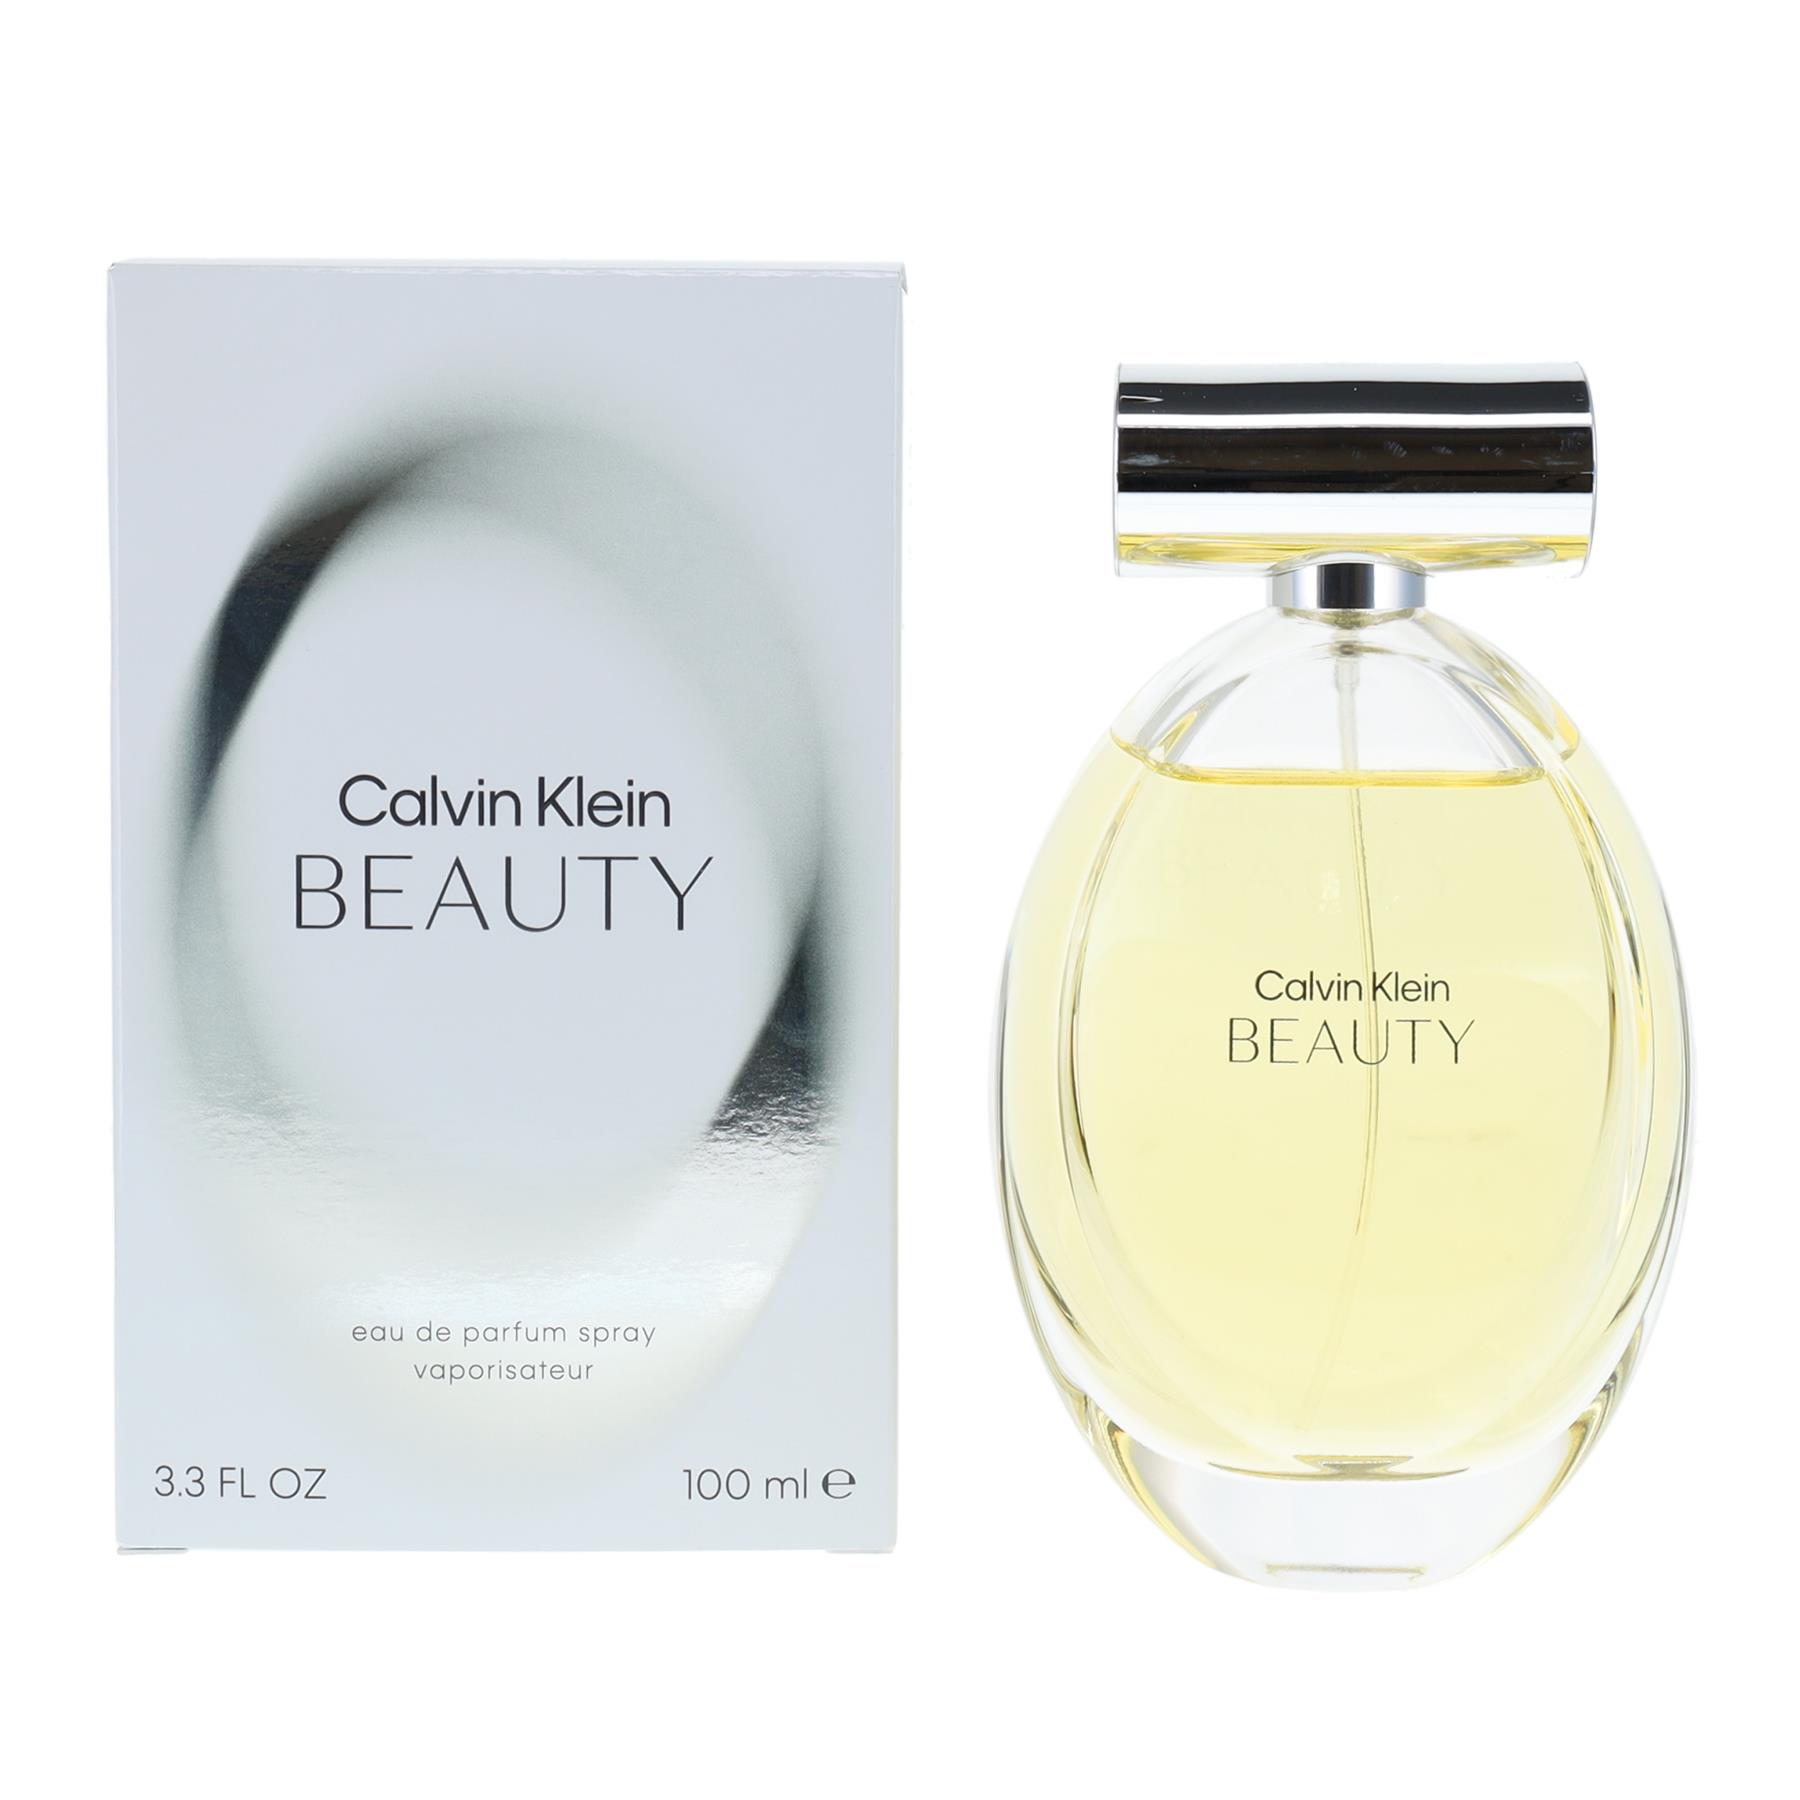 Calvin Klein Beauty 100ml Eau de Parfum Spray for Her from Perfume Plus Direct